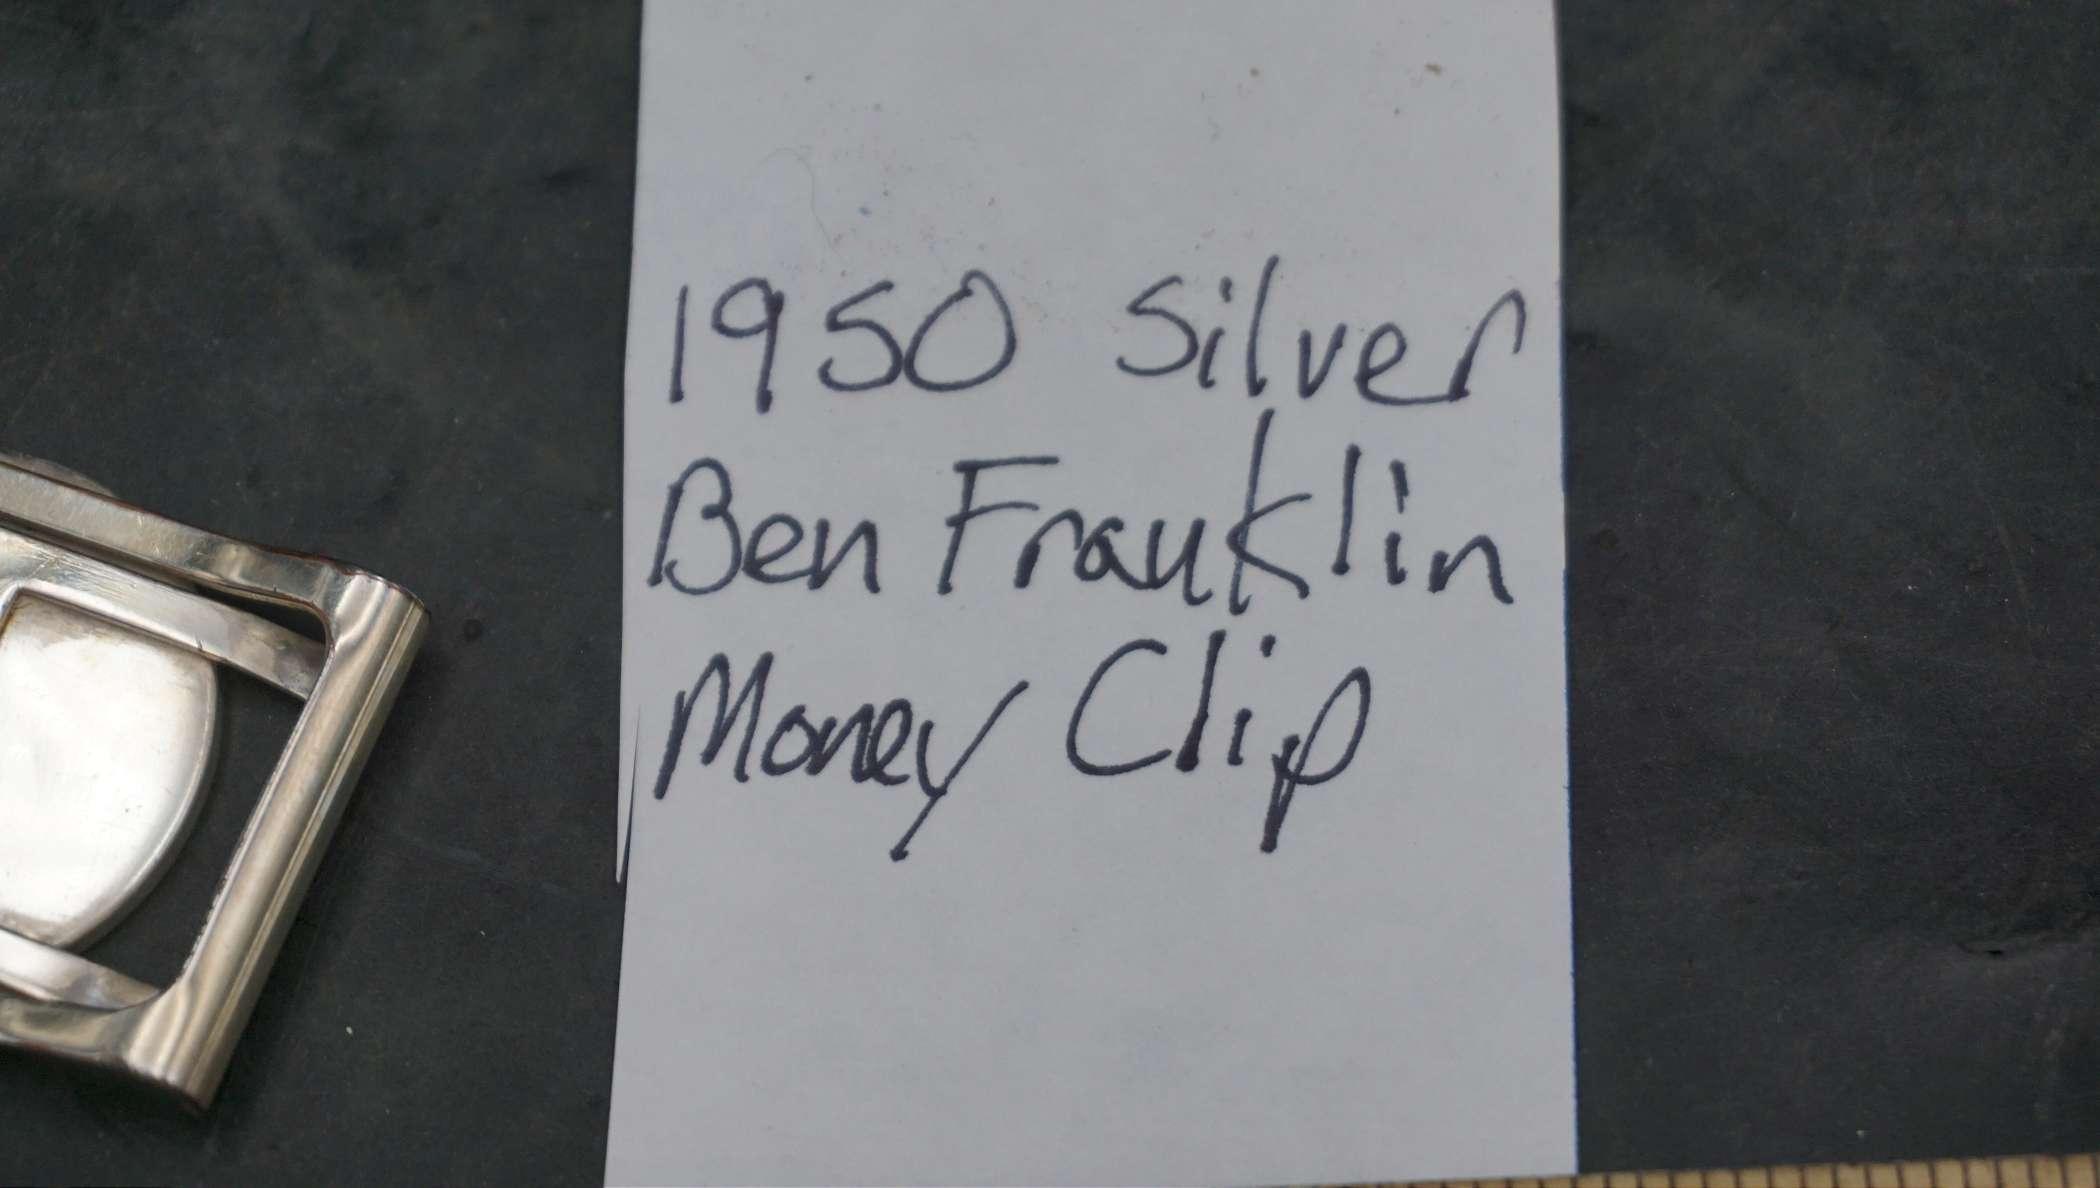 1950 Silver Ben Franklin Money Clip